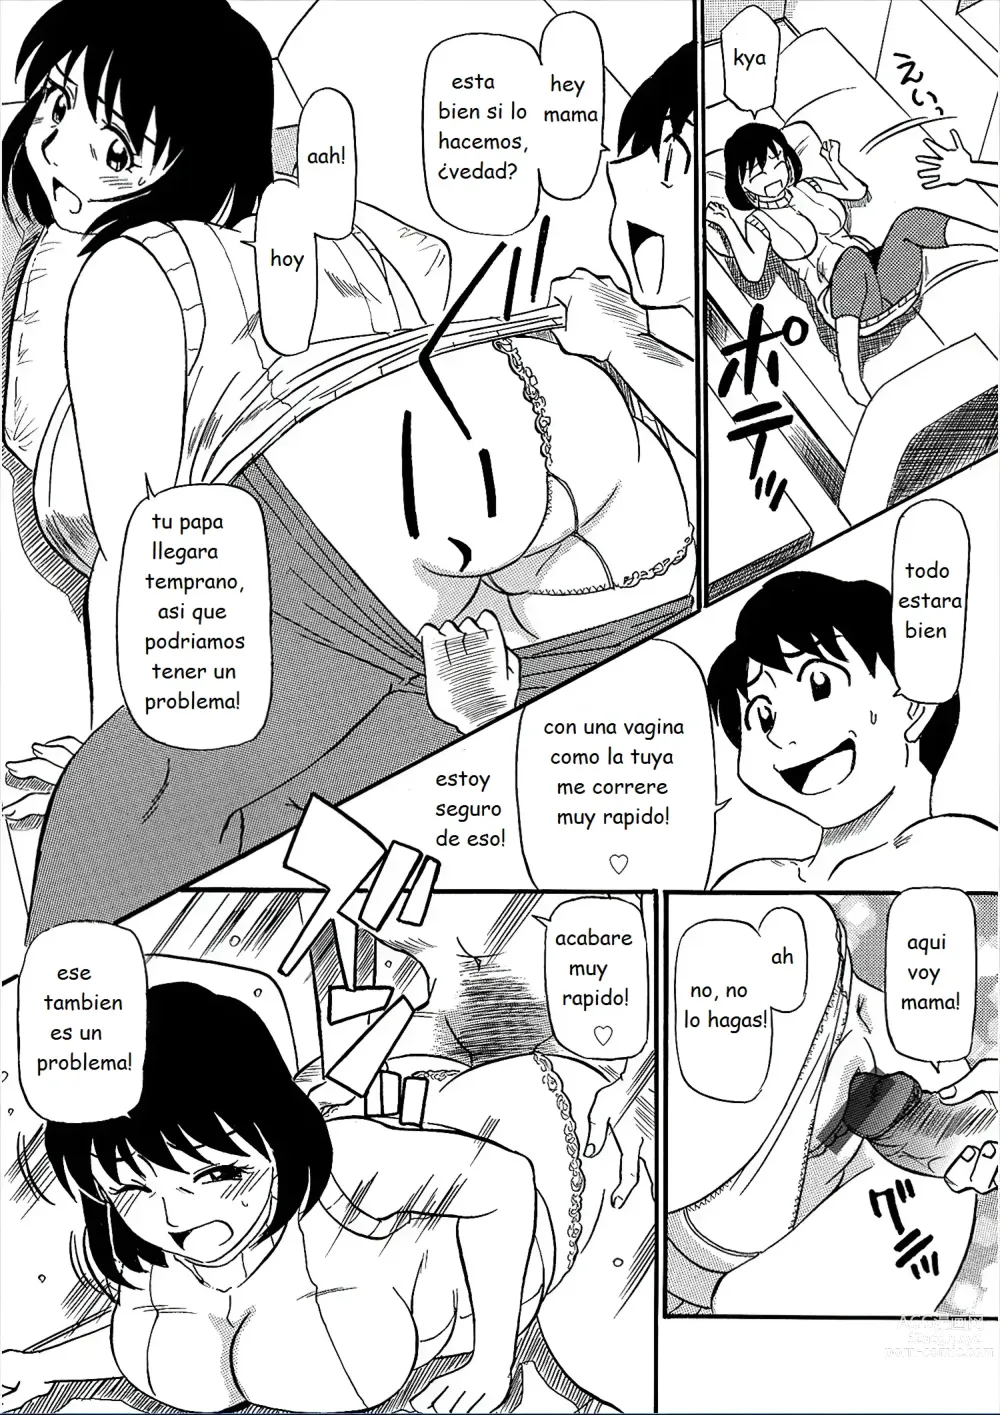 Page 12 of manga complaciendo a mama